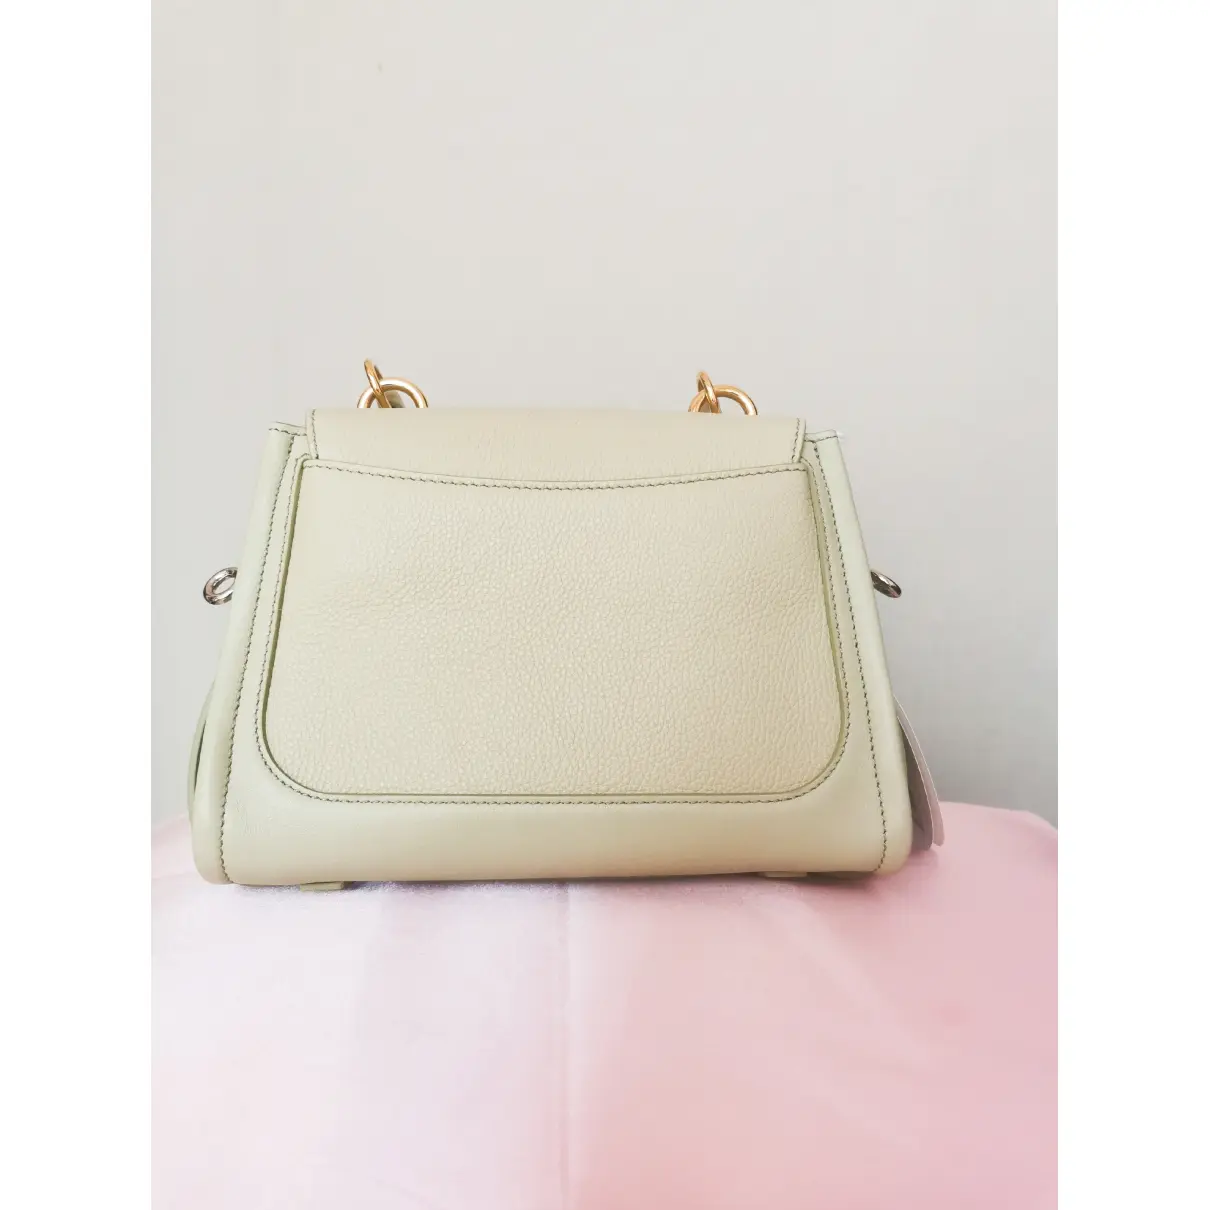 Buy Chloé Tess Day leather handbag online